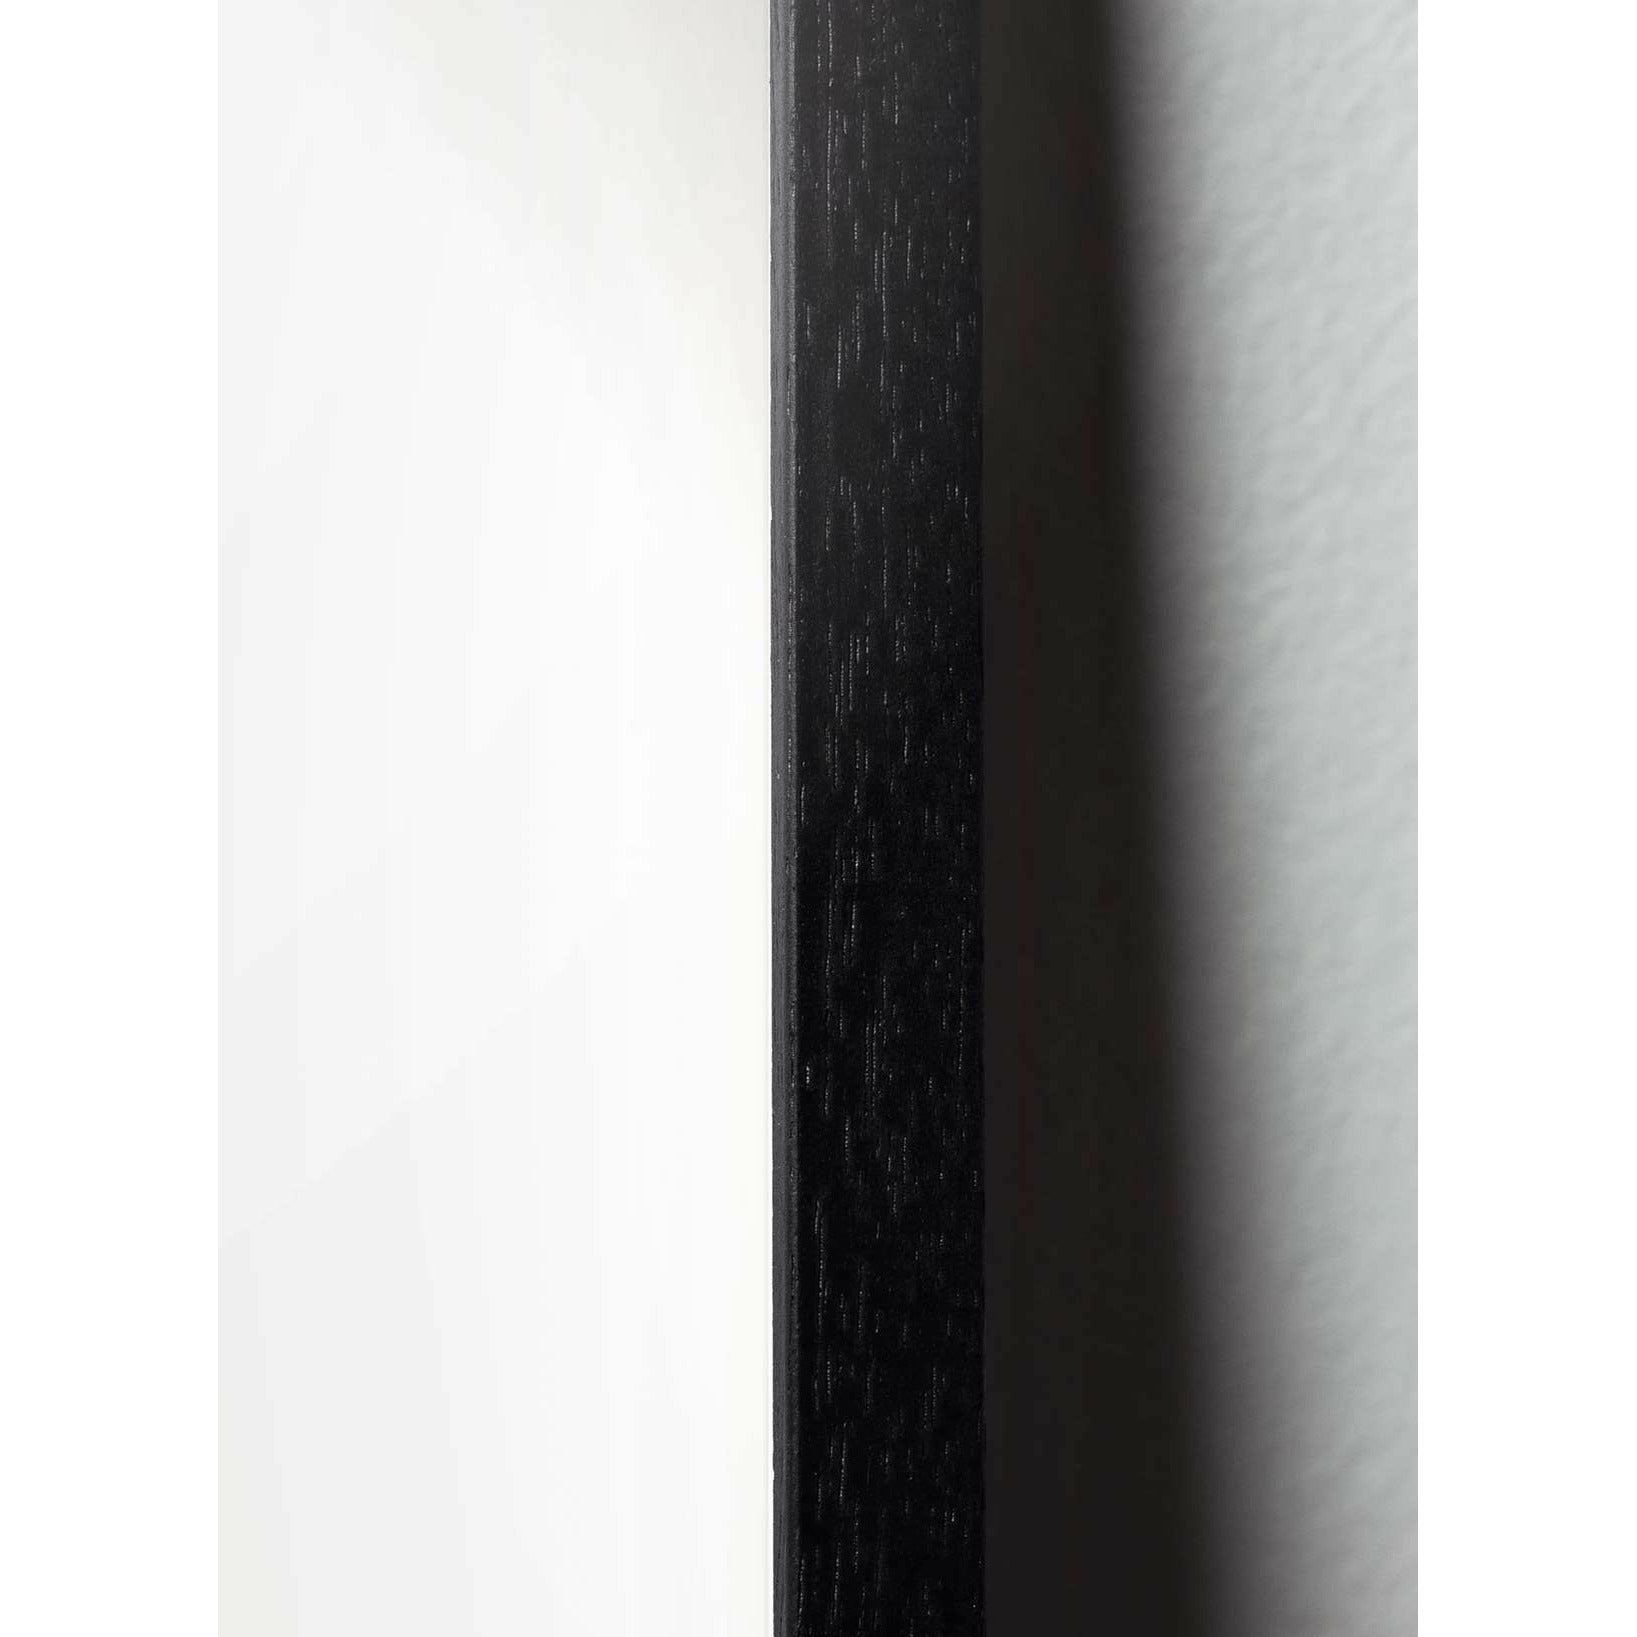 Brainchild Äggfigurens korsformat affisch, ram i svart målat trä 70x100 cm, brunt